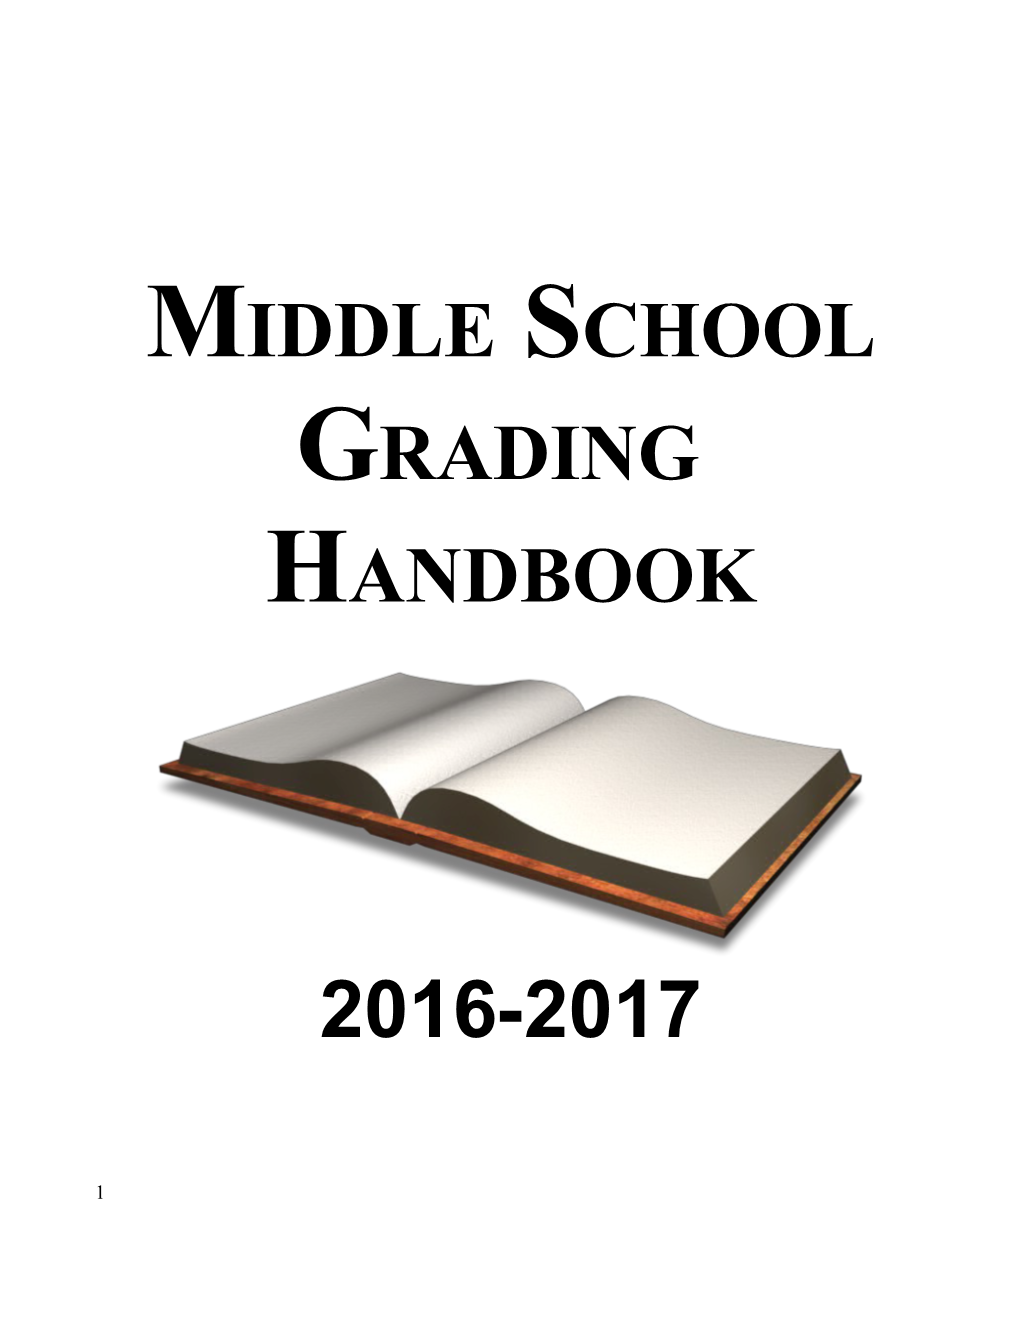 Grading Handbook Outline